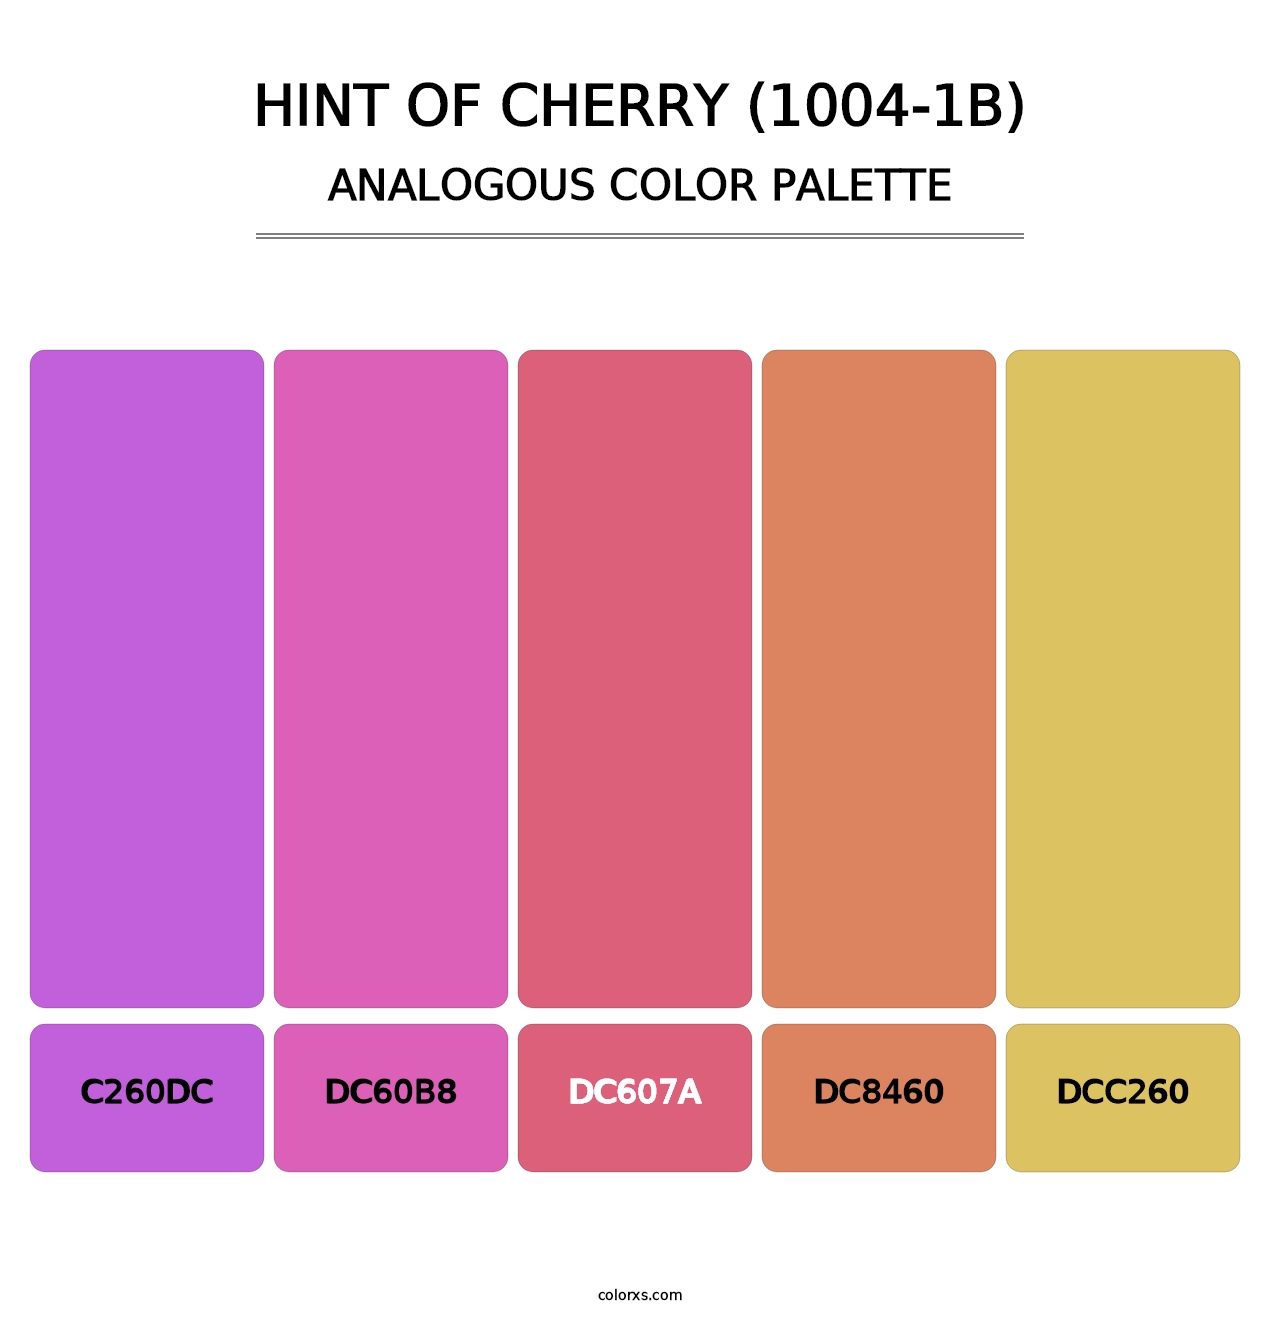 Hint of Cherry (1004-1B) - Analogous Color Palette